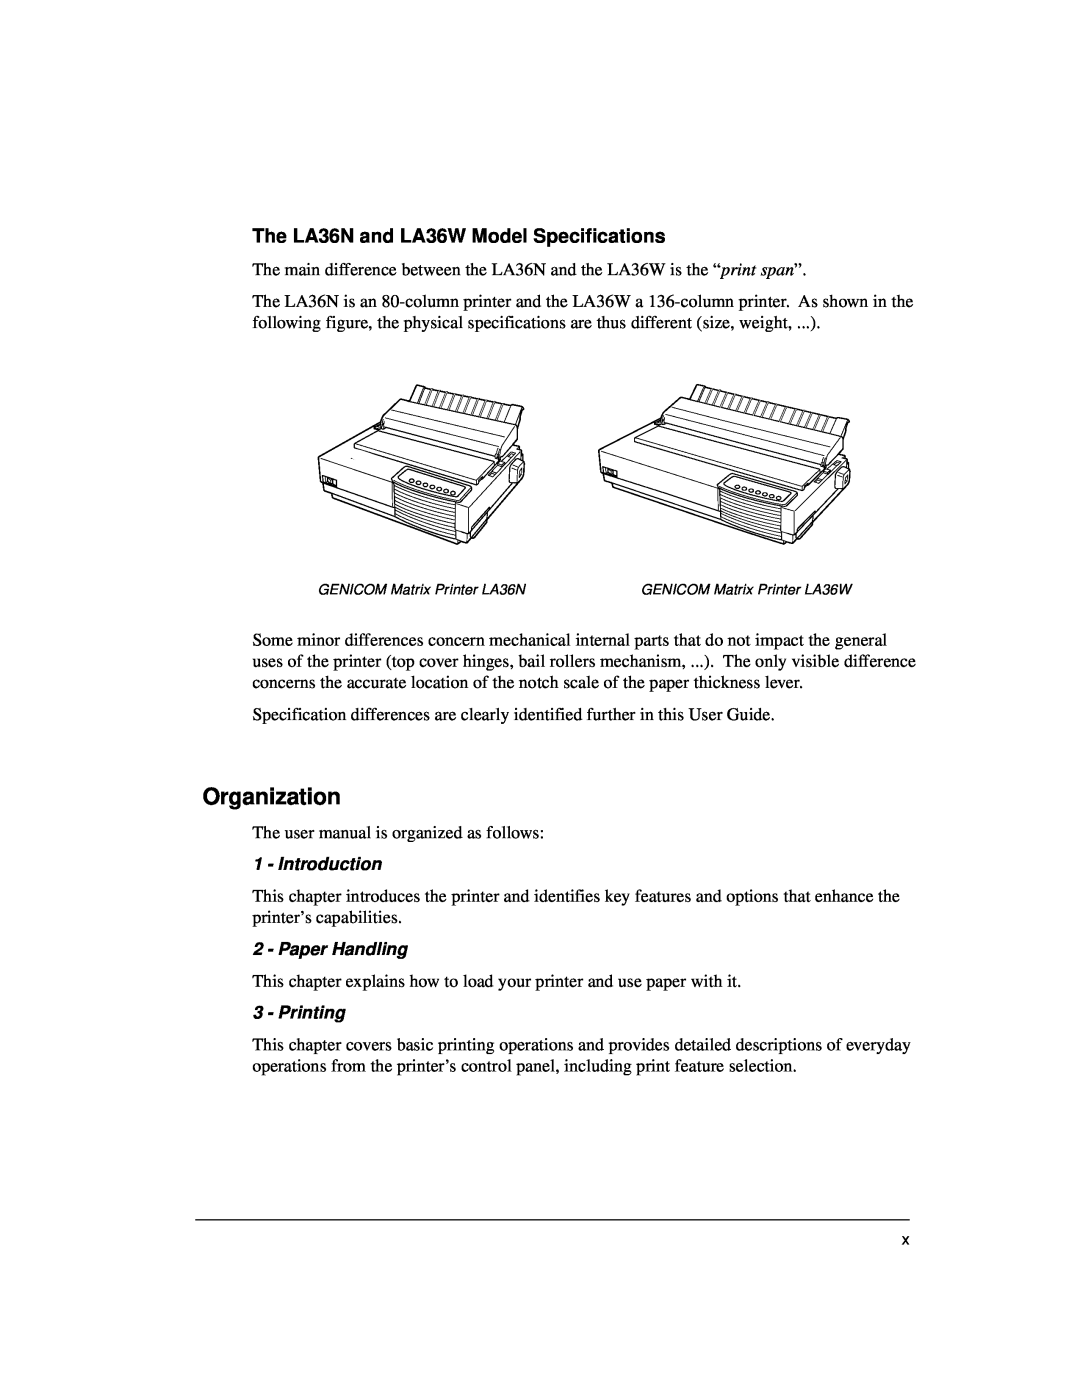 Genicom manual Organization, The LA36N and LA36W Model Specifications, Introduction, Paper Handling, Printing 